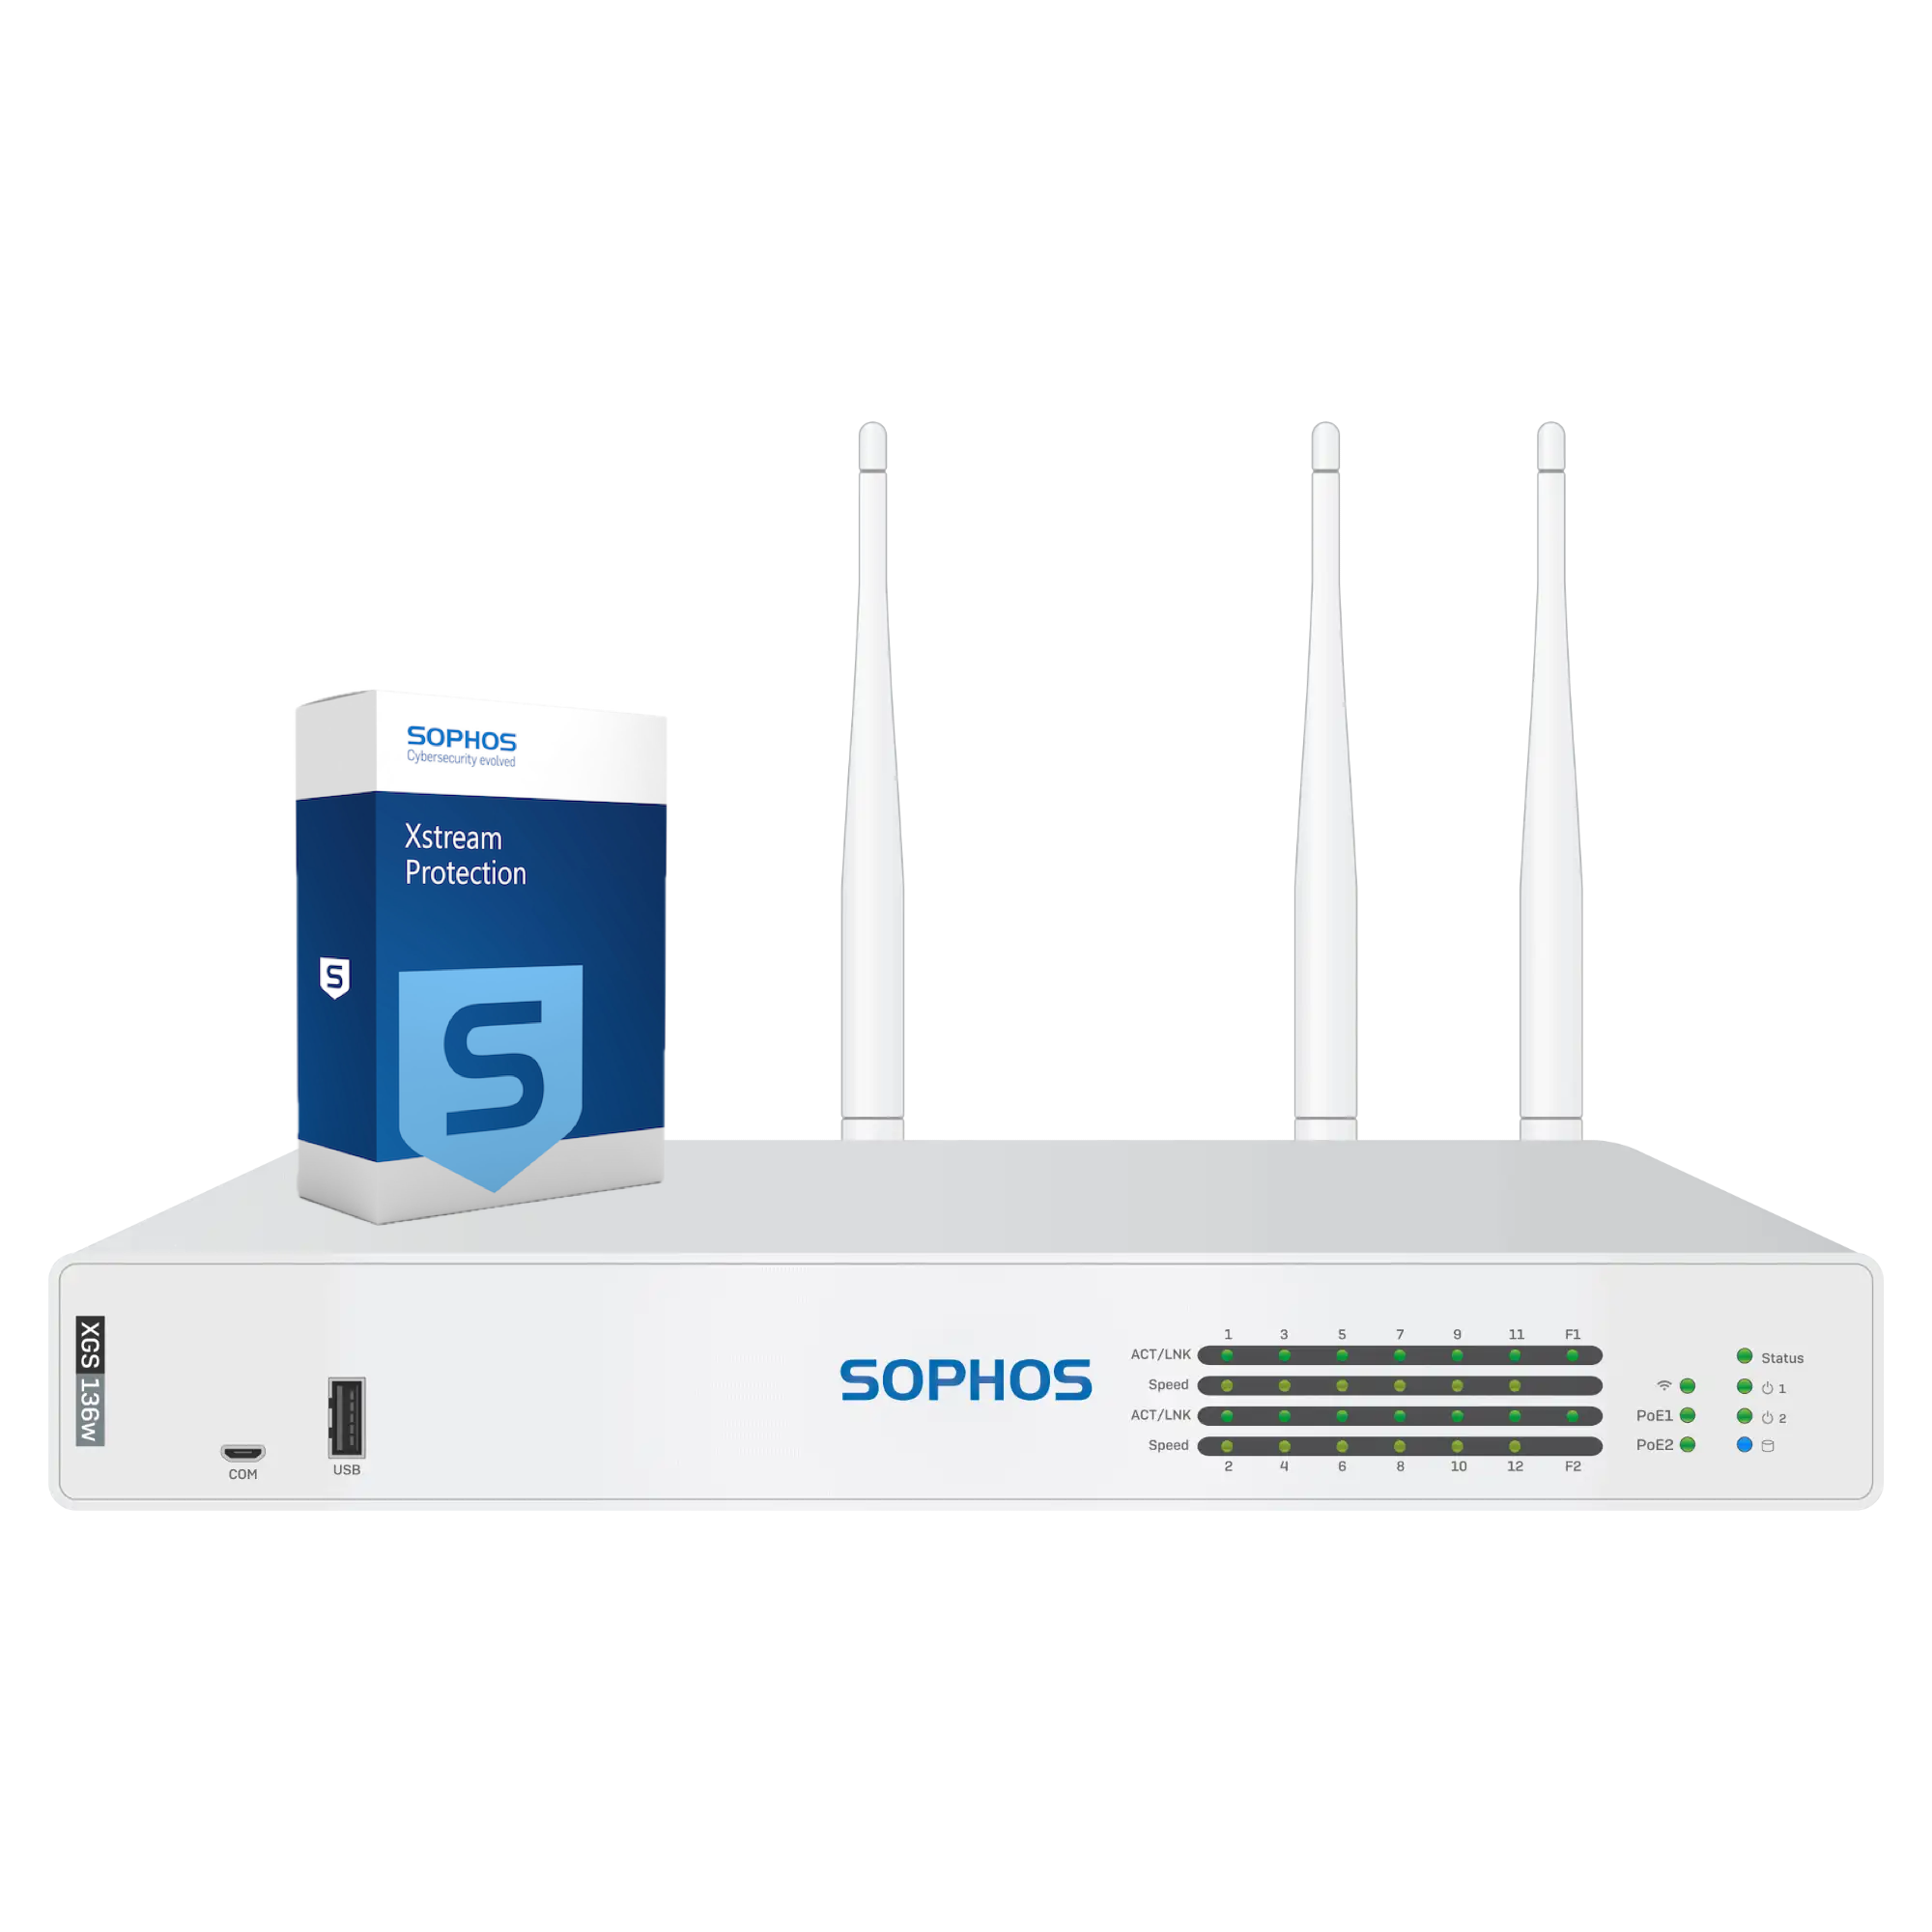 Sophos XGS 136w Firewall with Xstream Protection, 1-year - EU power cord